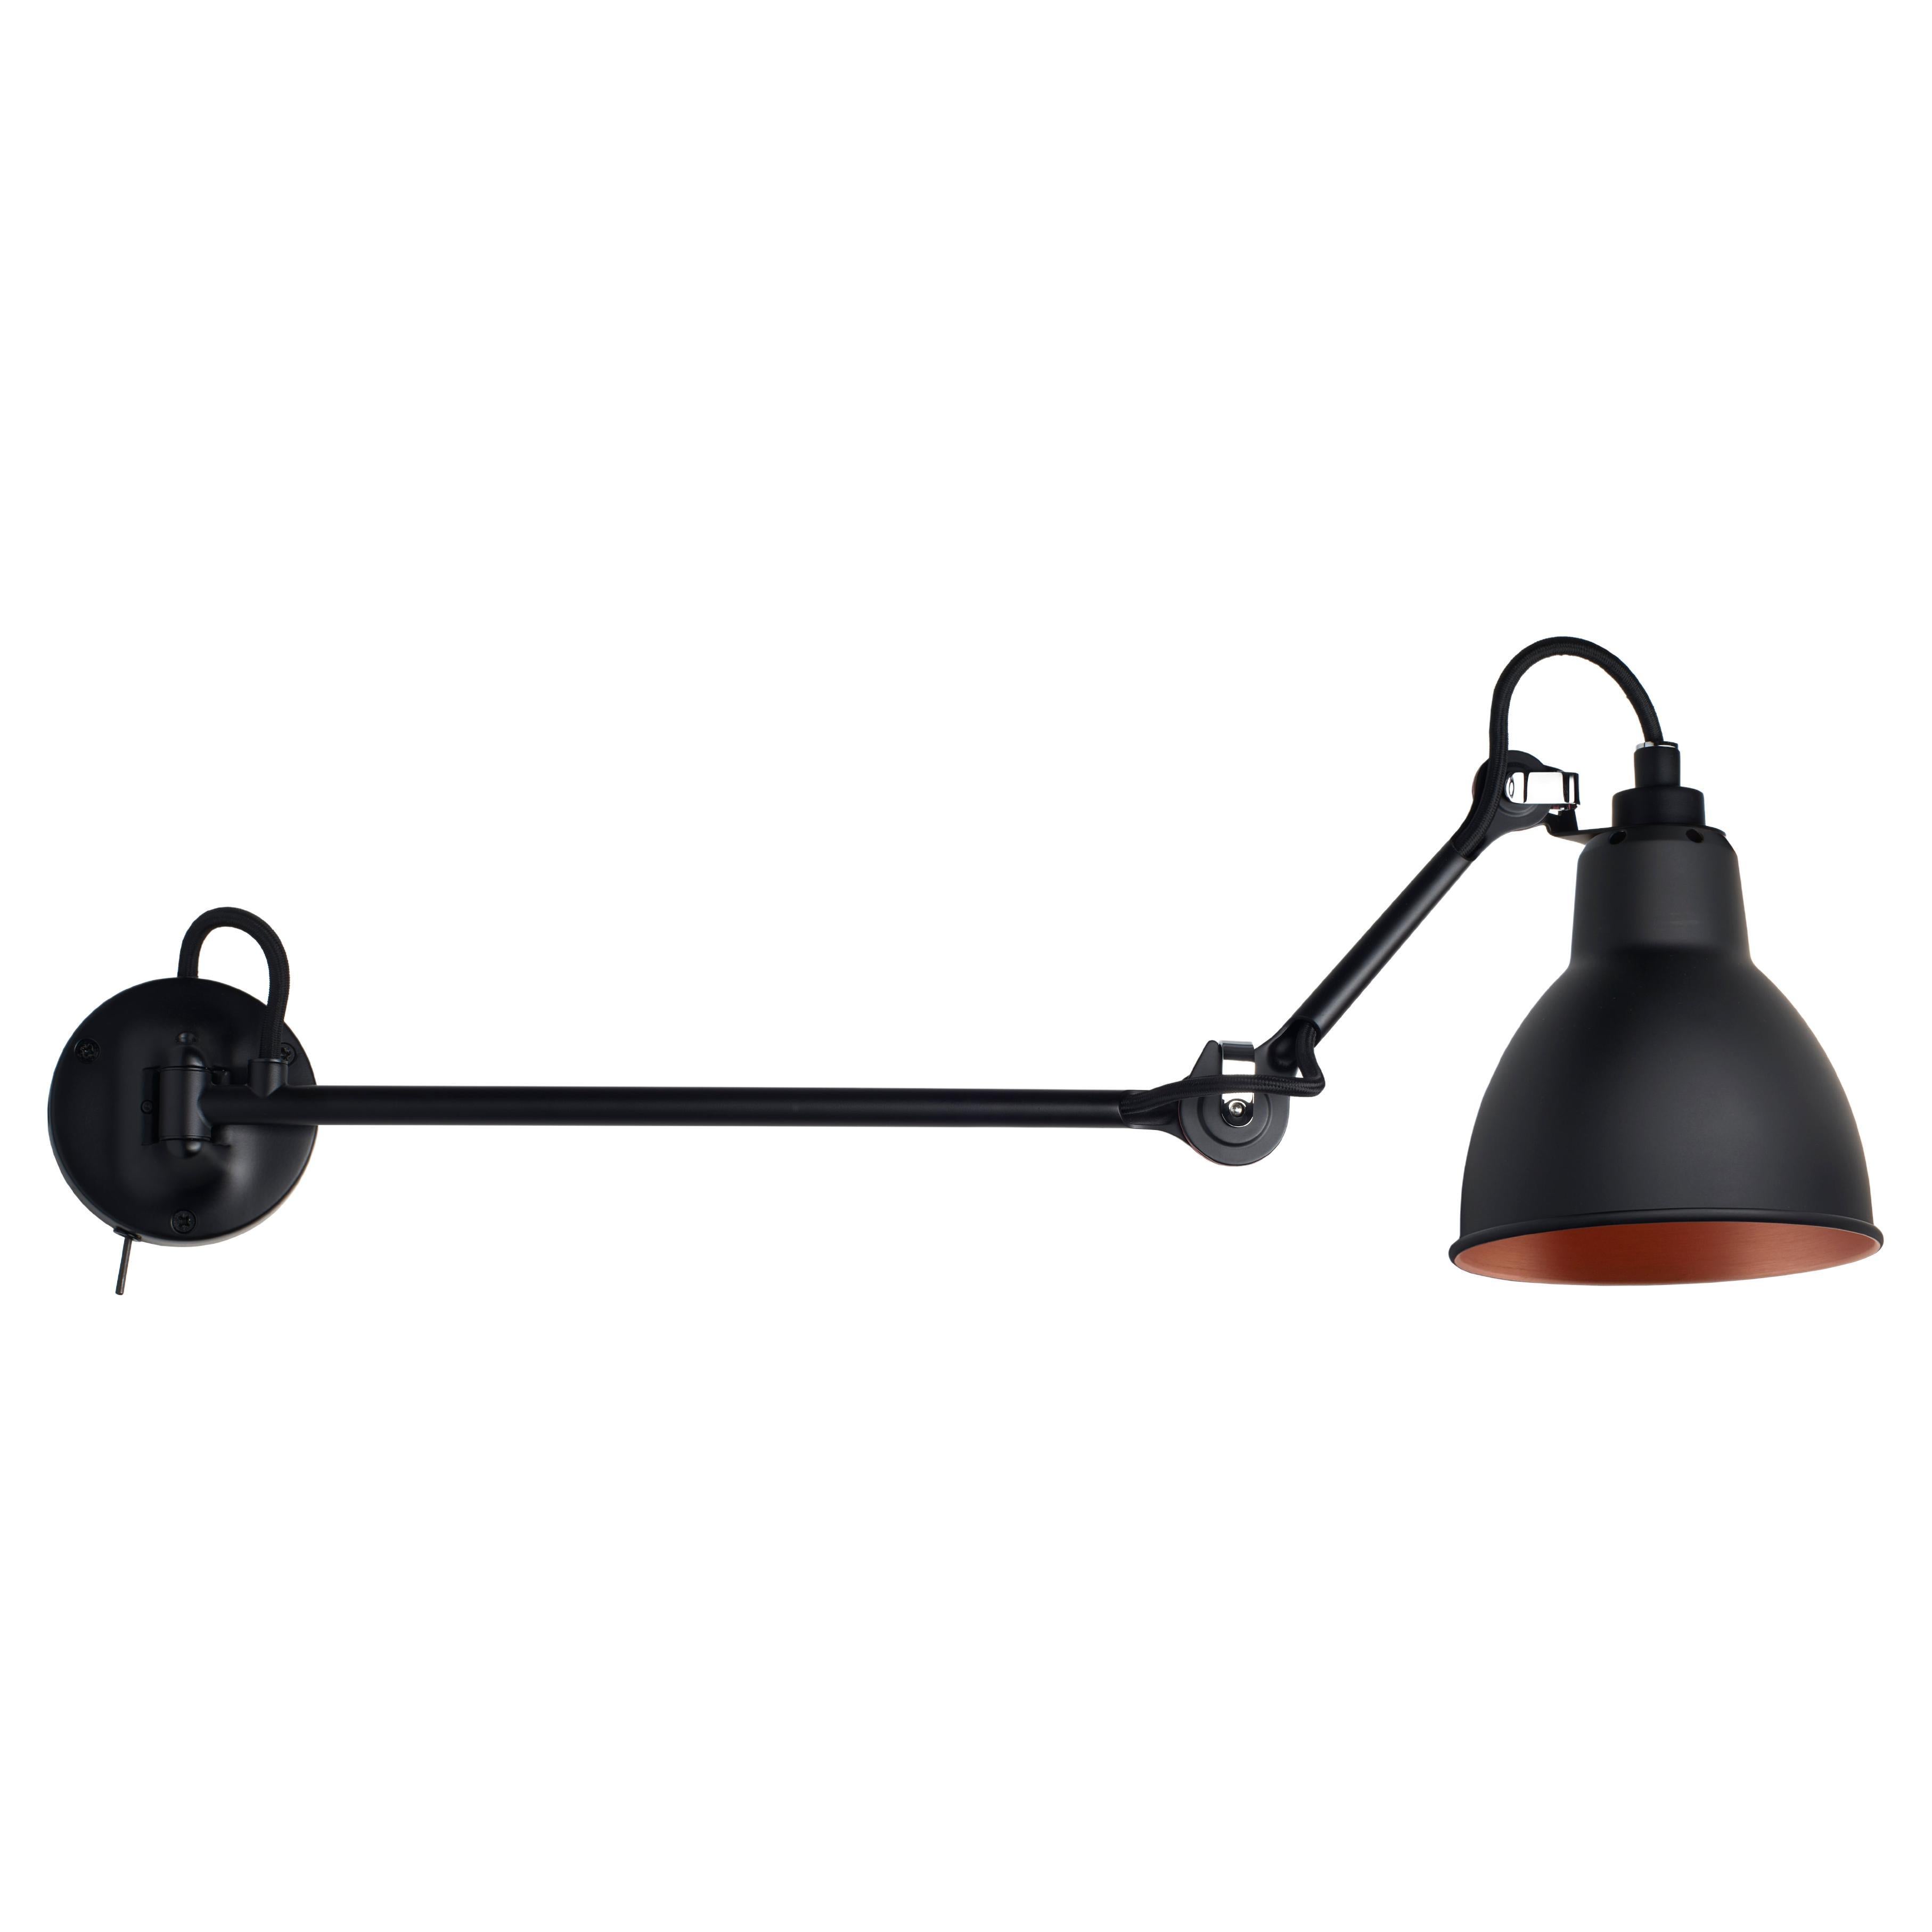 DCW Editions La Lampe Gras N°204 L40 SW Wall Lamp in Black & Black Copper Shade For Sale